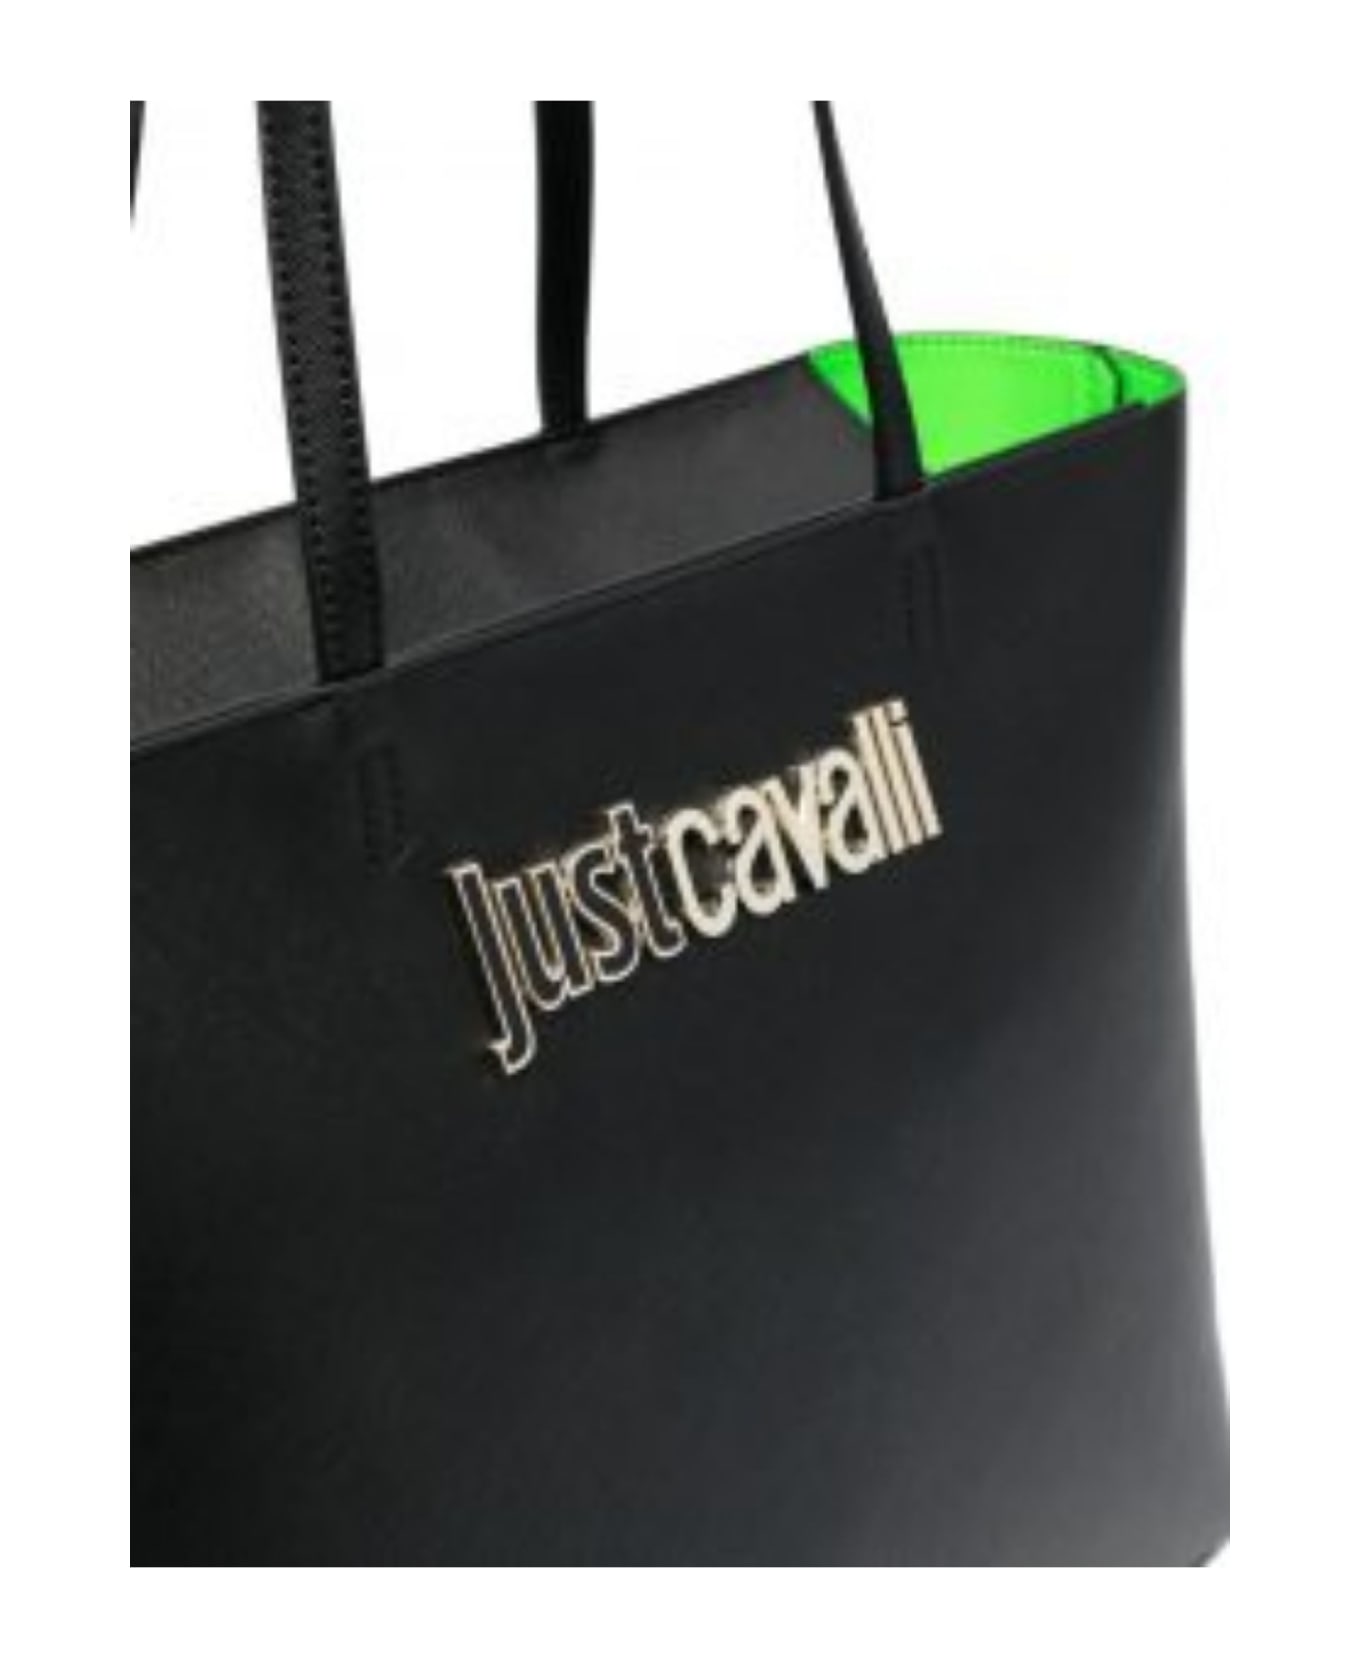 Just Cavalli Bag - Black トートバッグ